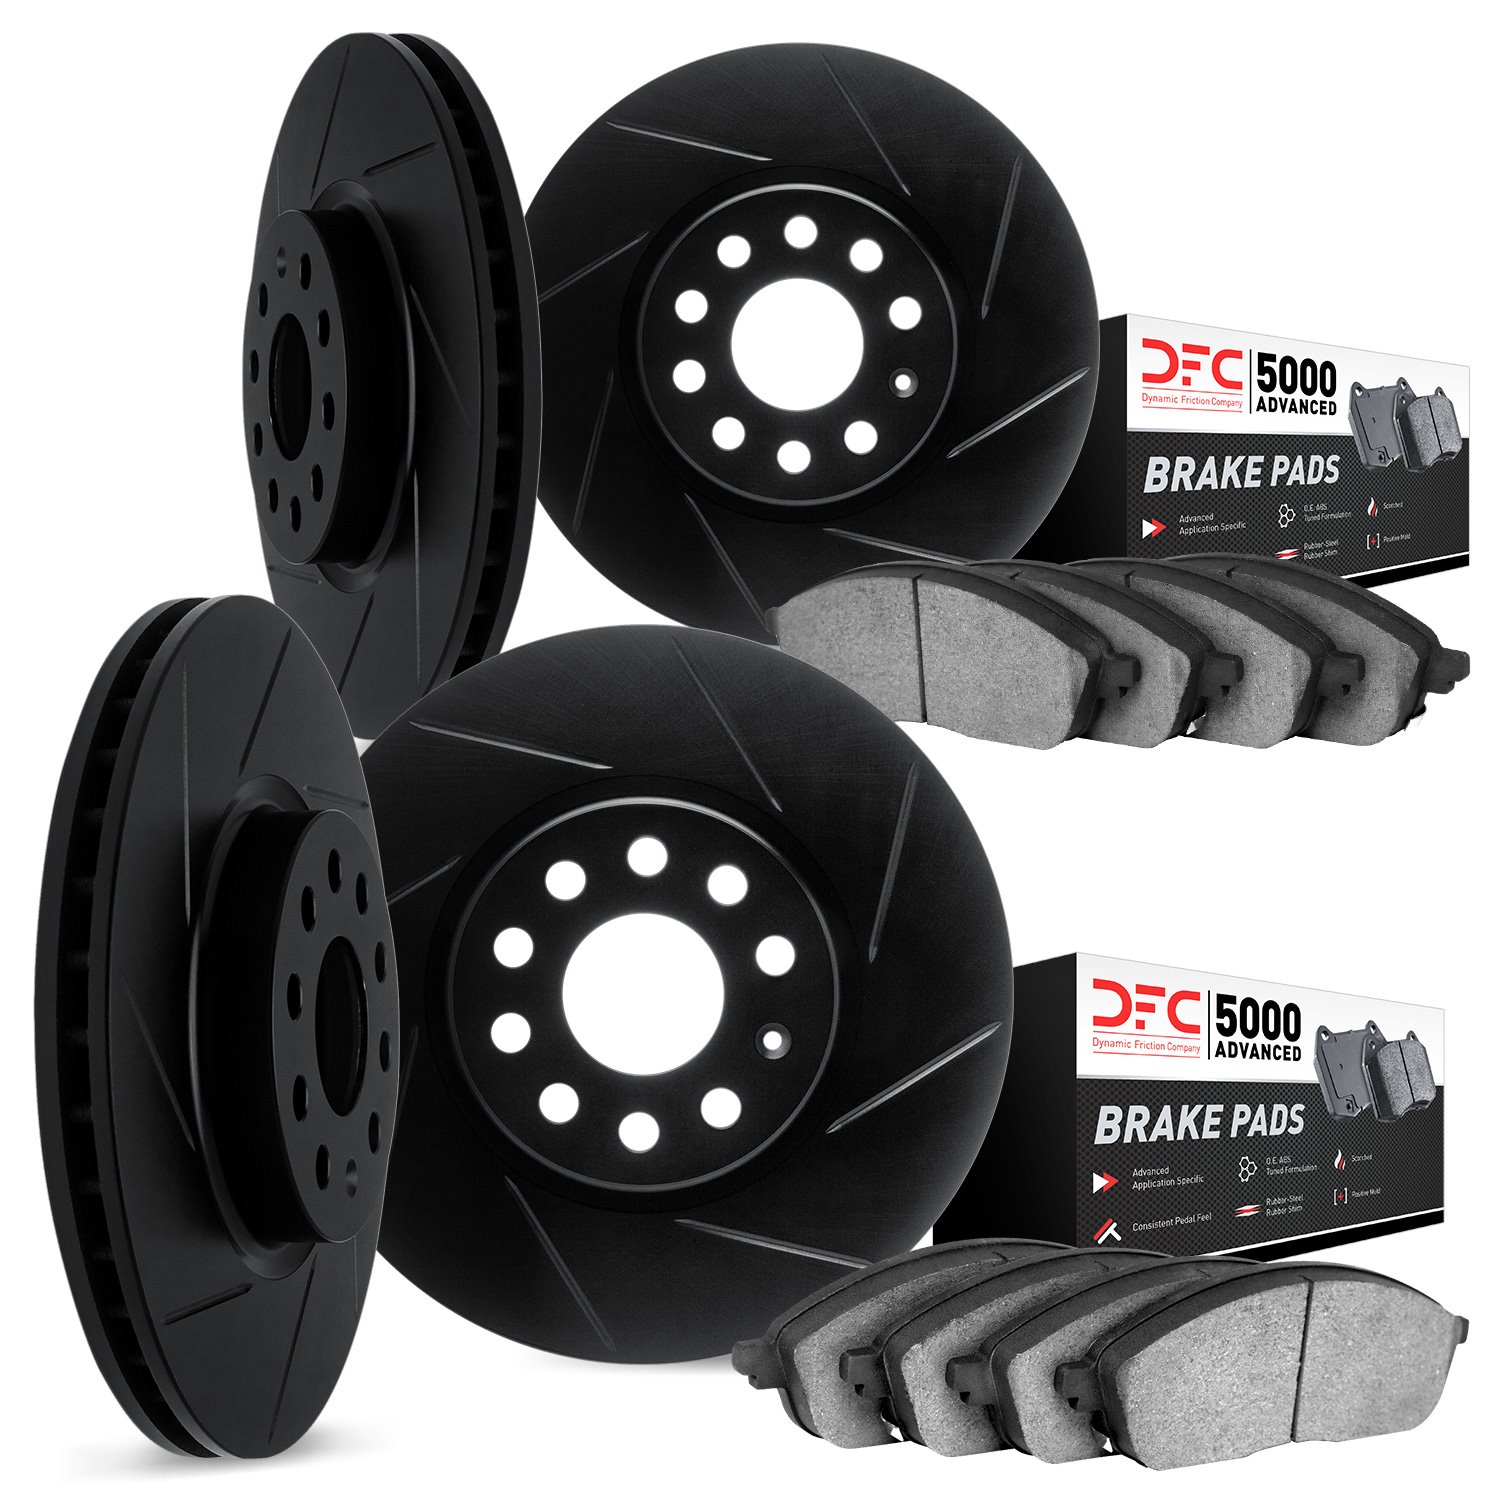 3514-68006 Slotted Brake Rotors w/5000 Advanced Brake Pads Kit & Hardware [Black], 2014-2014 Infiniti/Nissan, Position: Front an